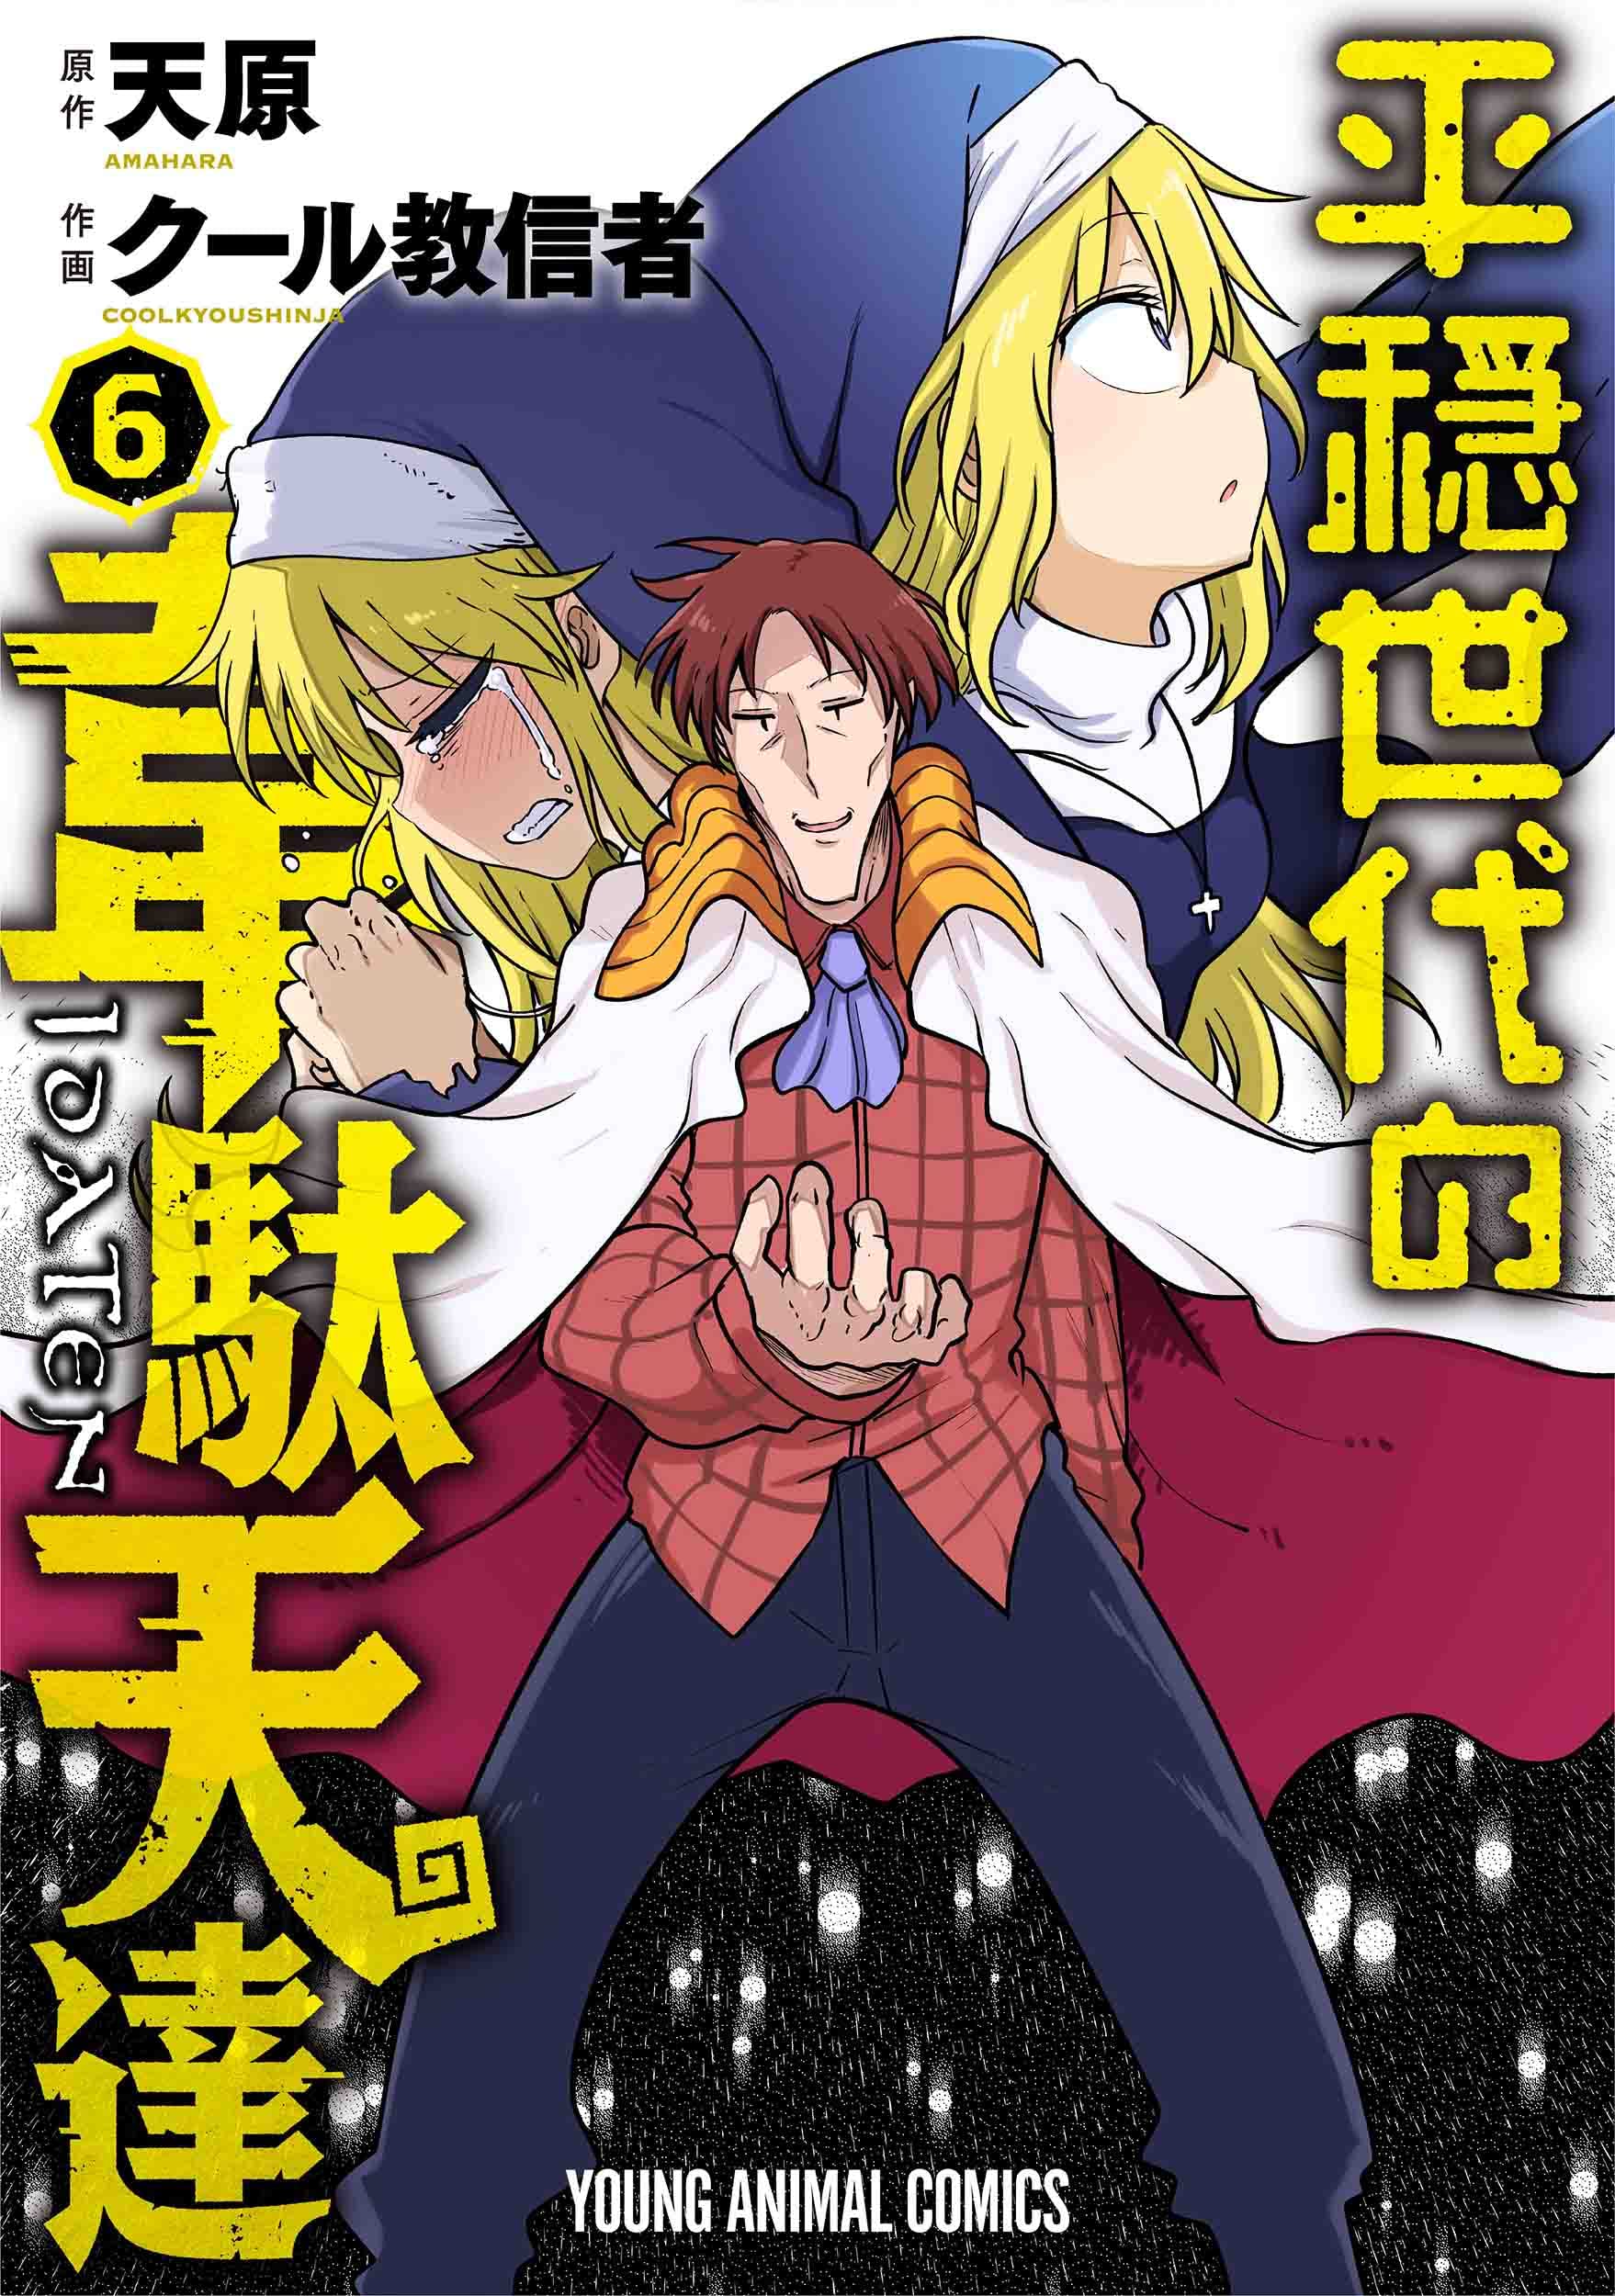 Manga 'Heion Sedai no Idaten-tachi' Gets TV Anime 